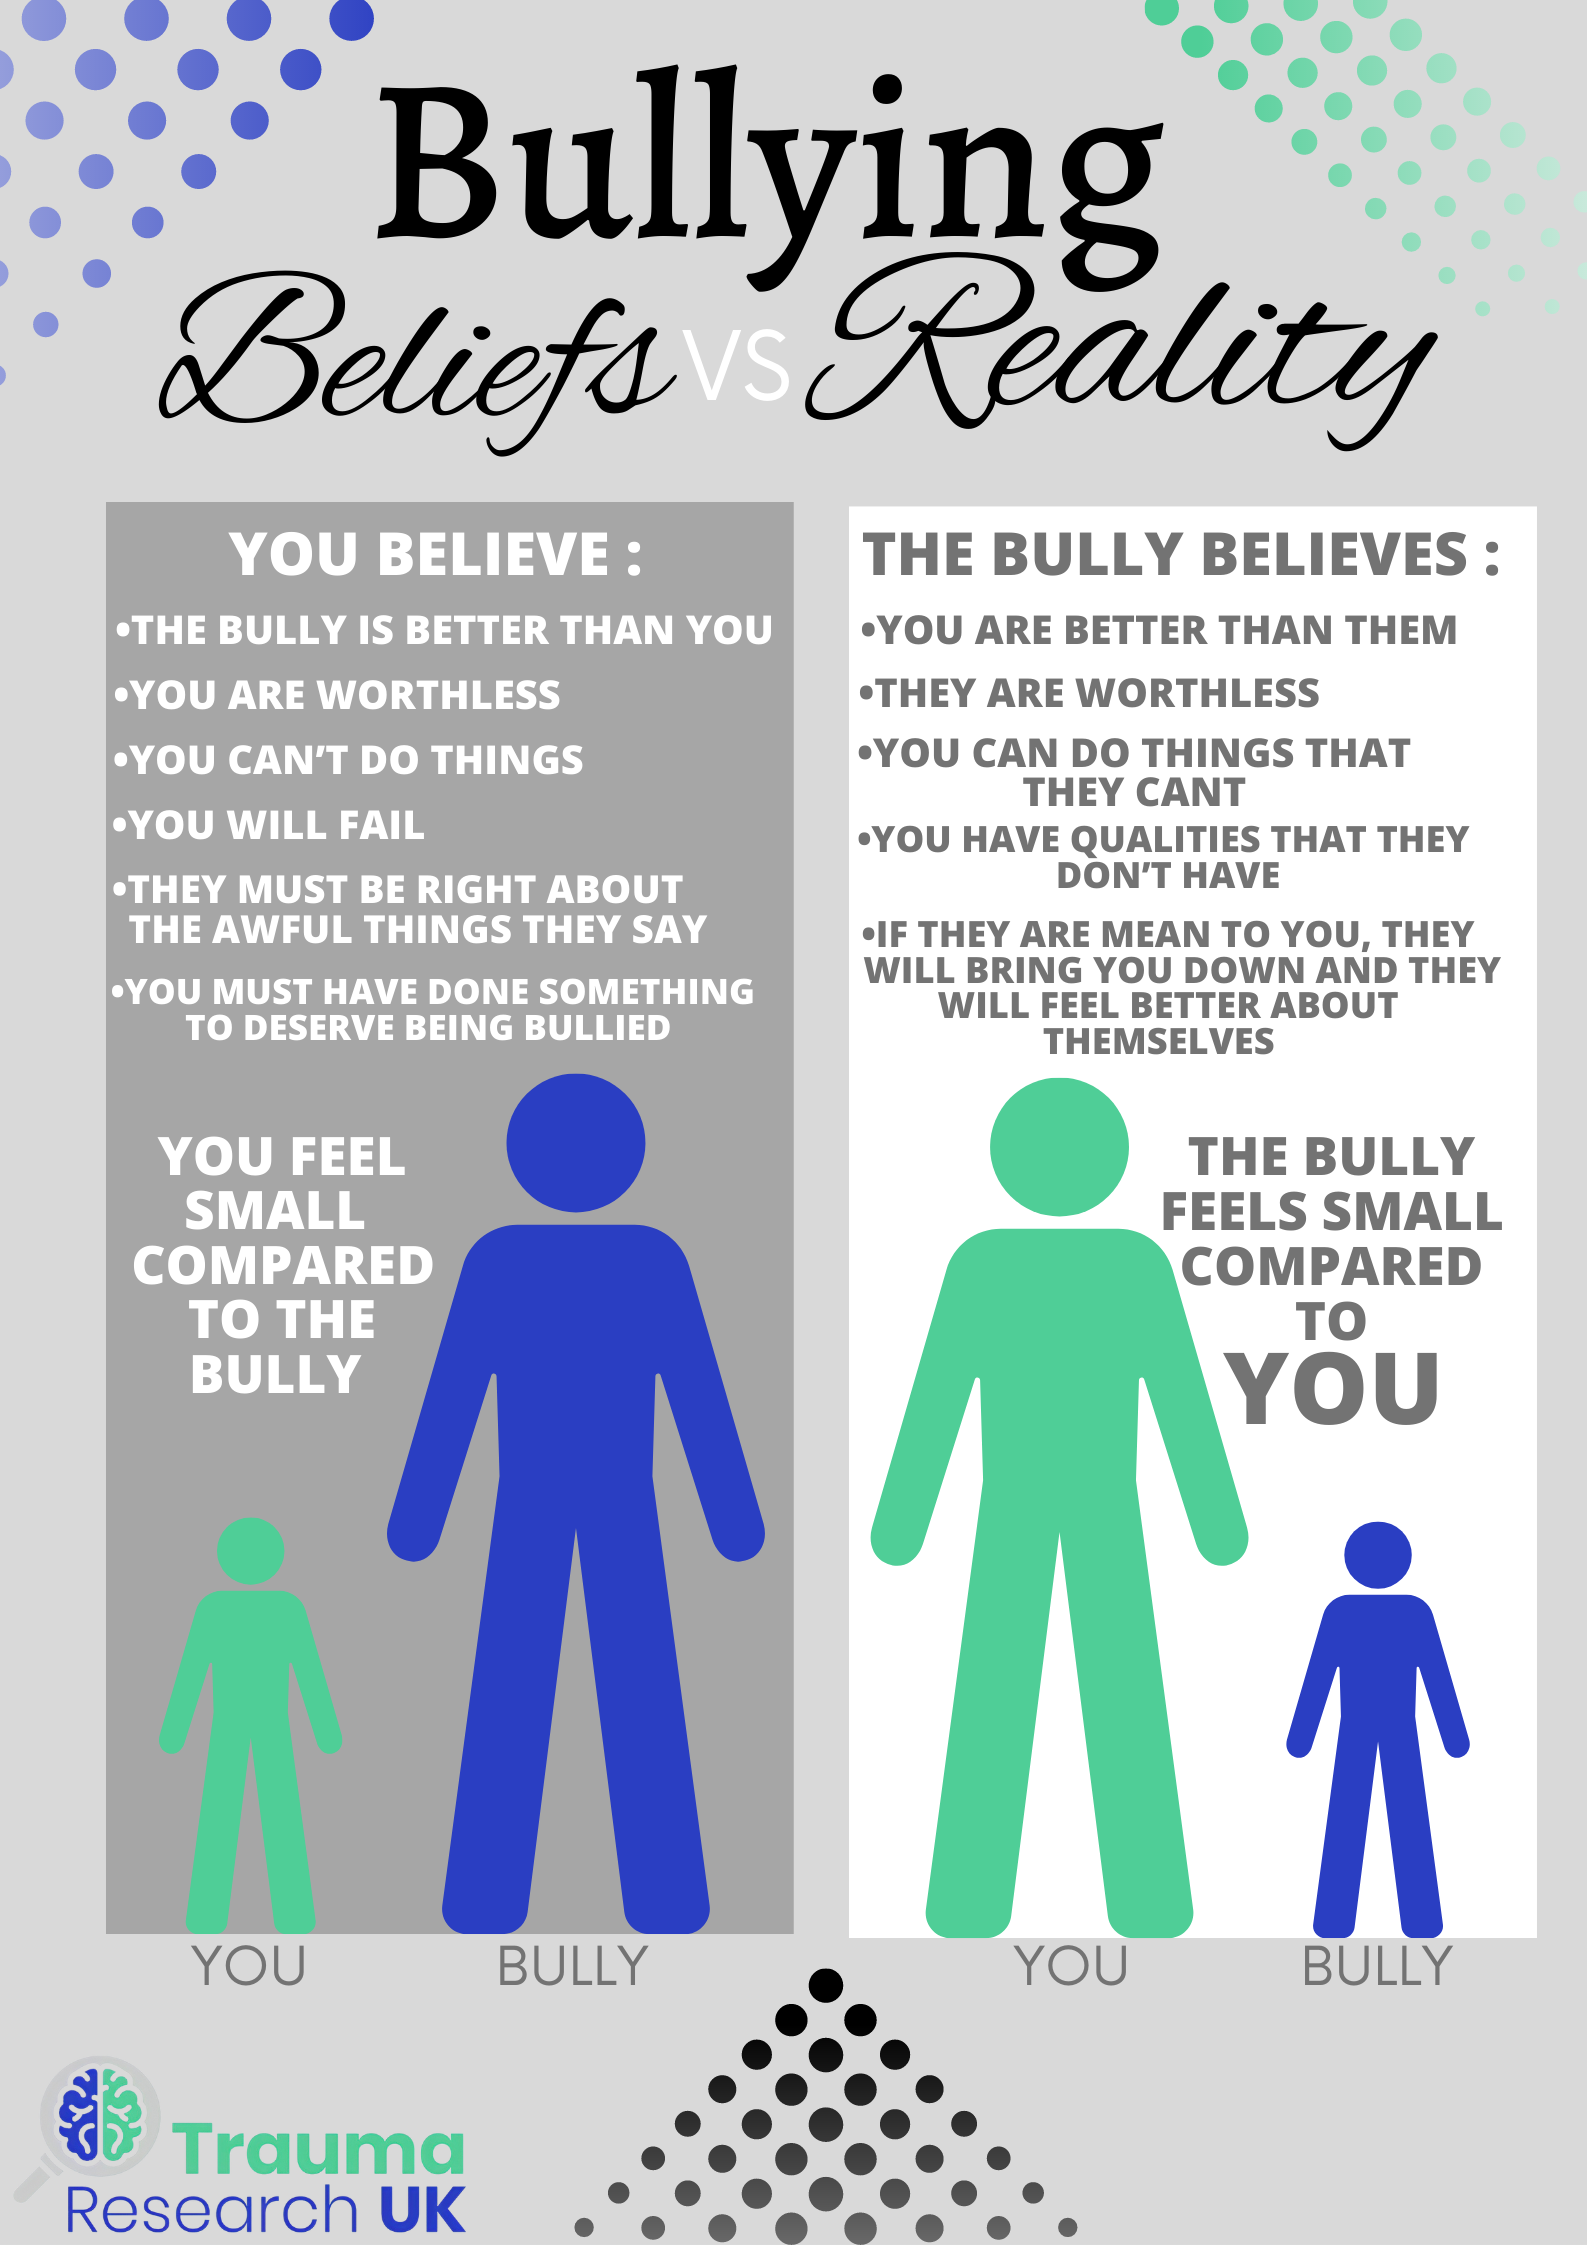 Bullying belief vs reality